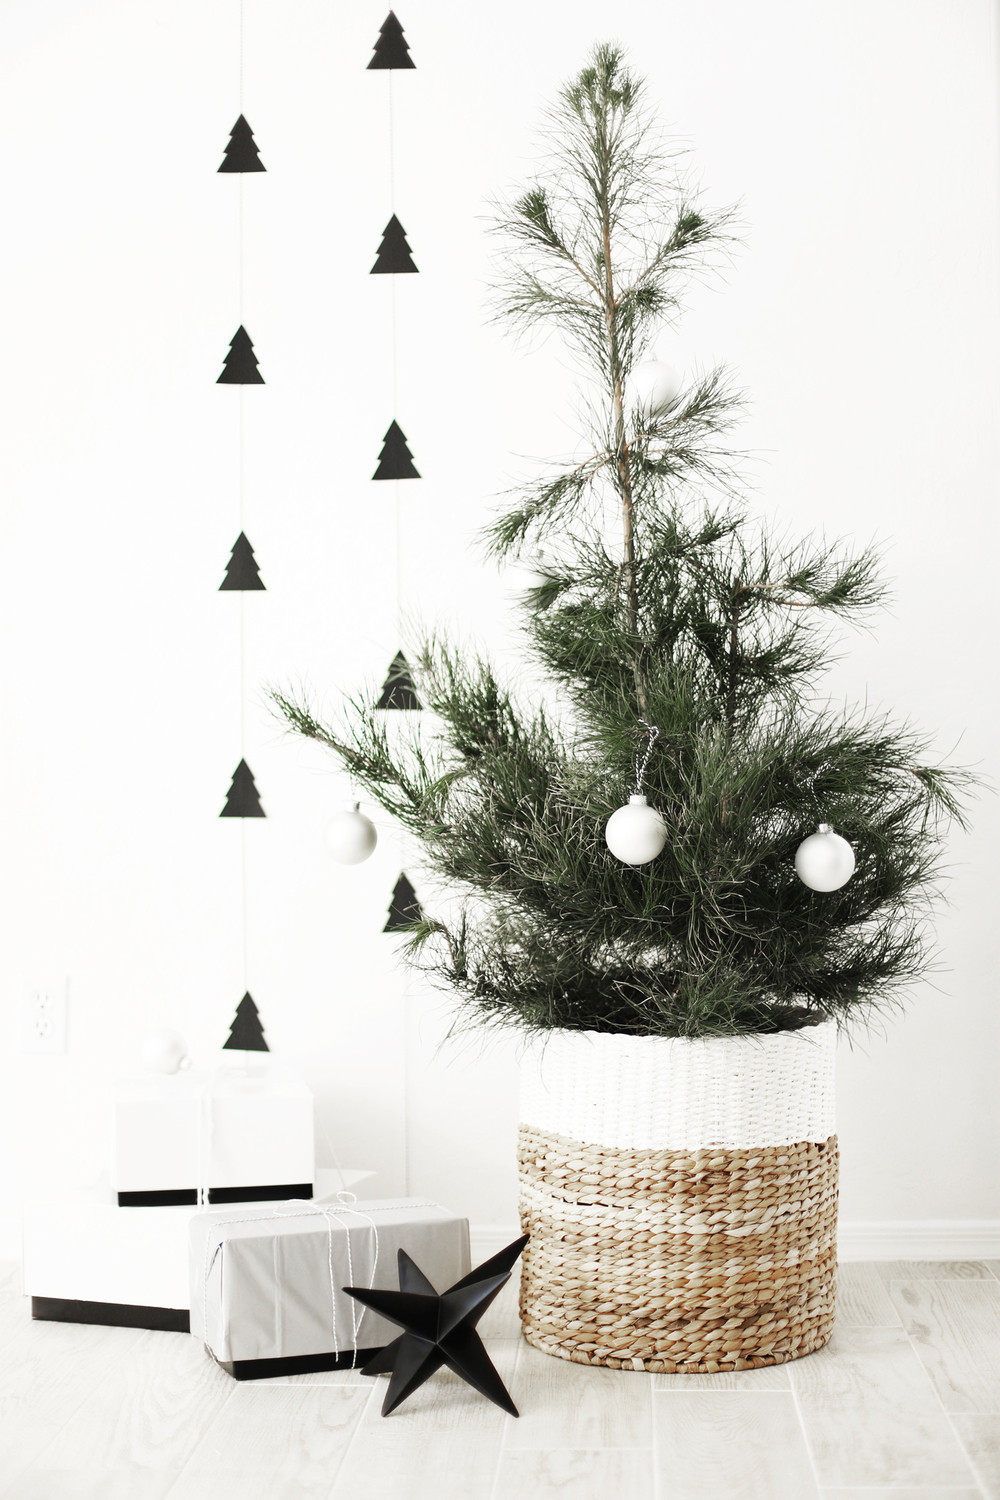 Best ideas about DIY Christmas Tree Garland
. Save or Pin DIY Christmas tree garland A Charlie Brown tree — Kristi Now.